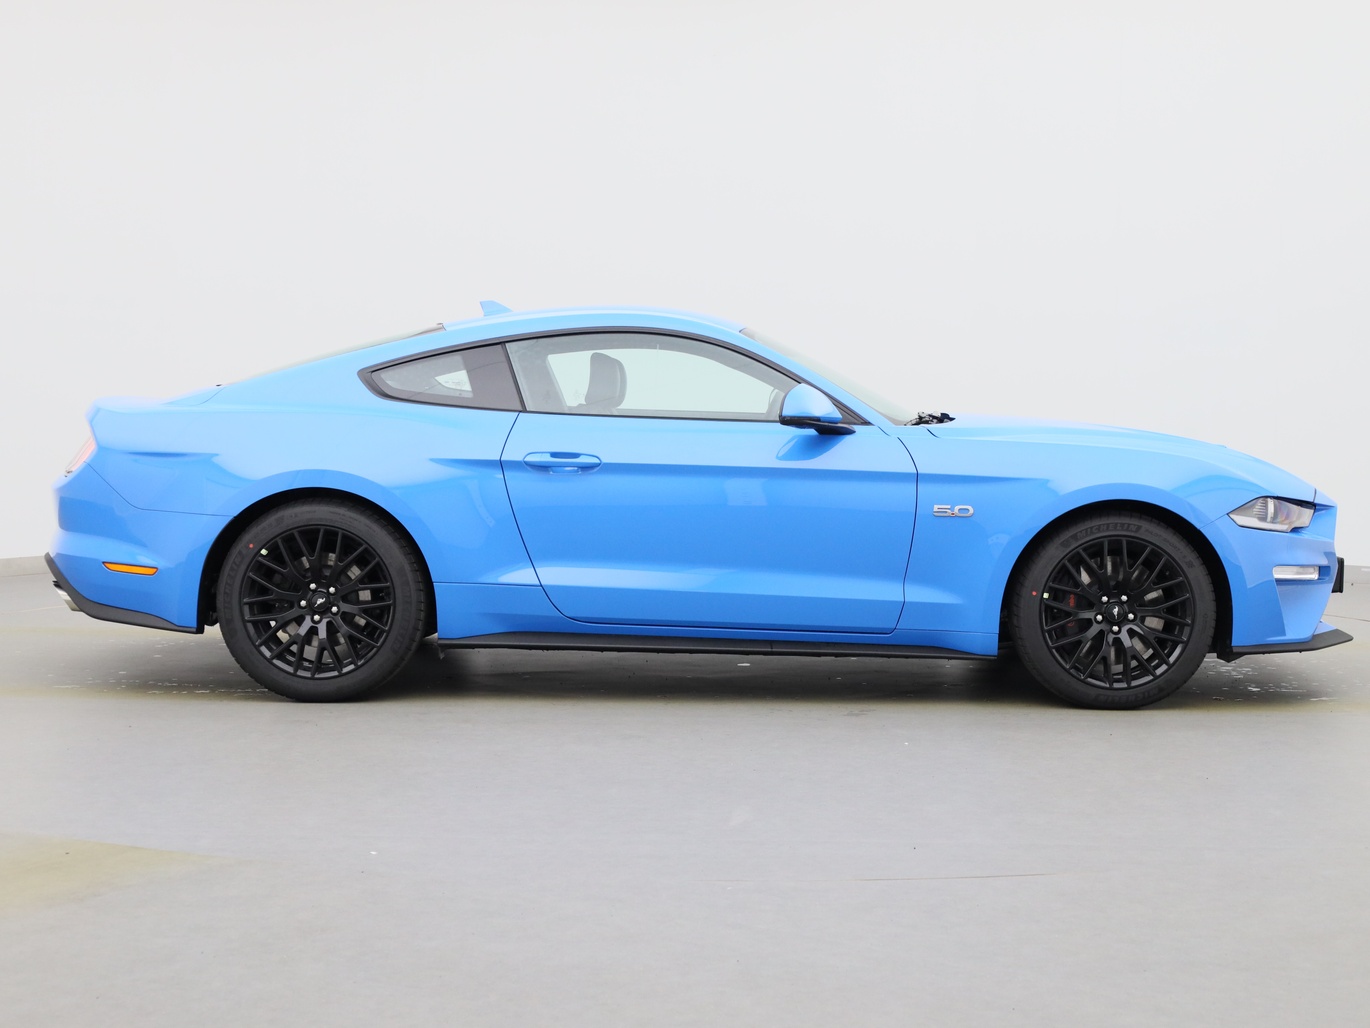  Ford Mustang GT Coupé V8 450PS / Premium 2 / Magne in Grabber Blue von Rechts